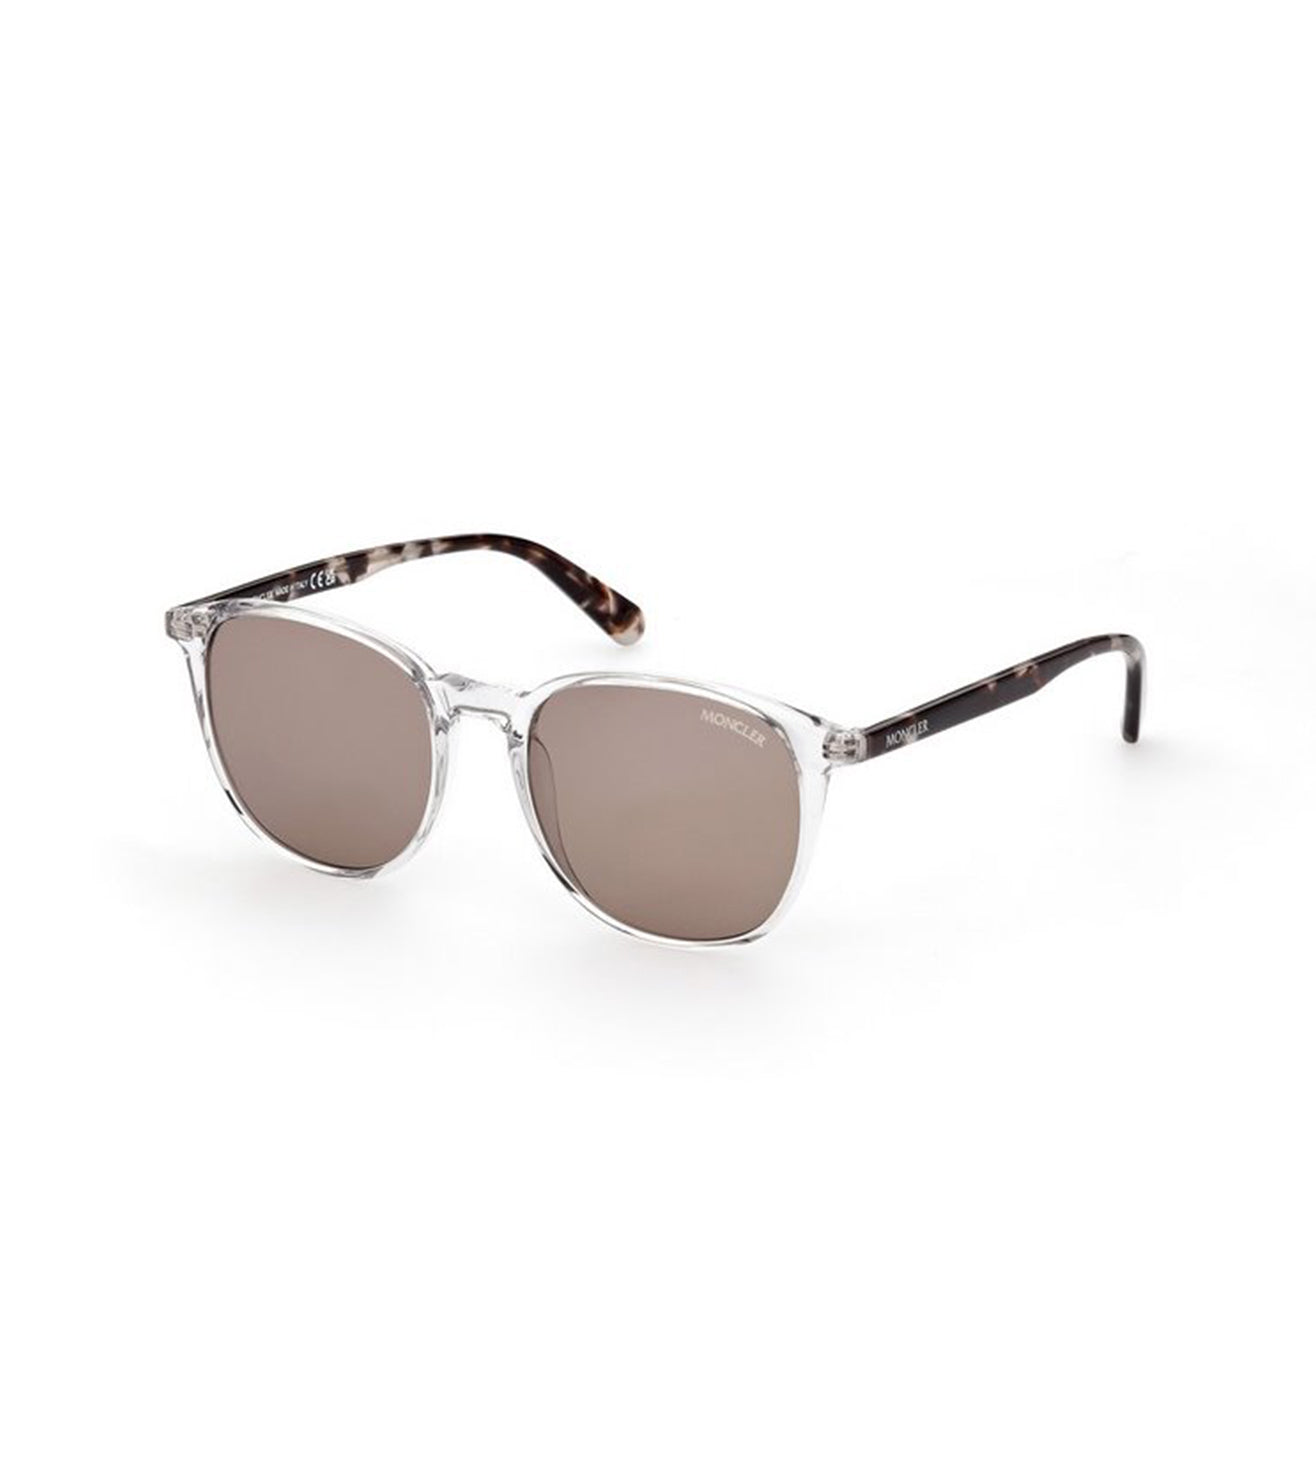 Moncler Unisex Brown Square Sunglasses